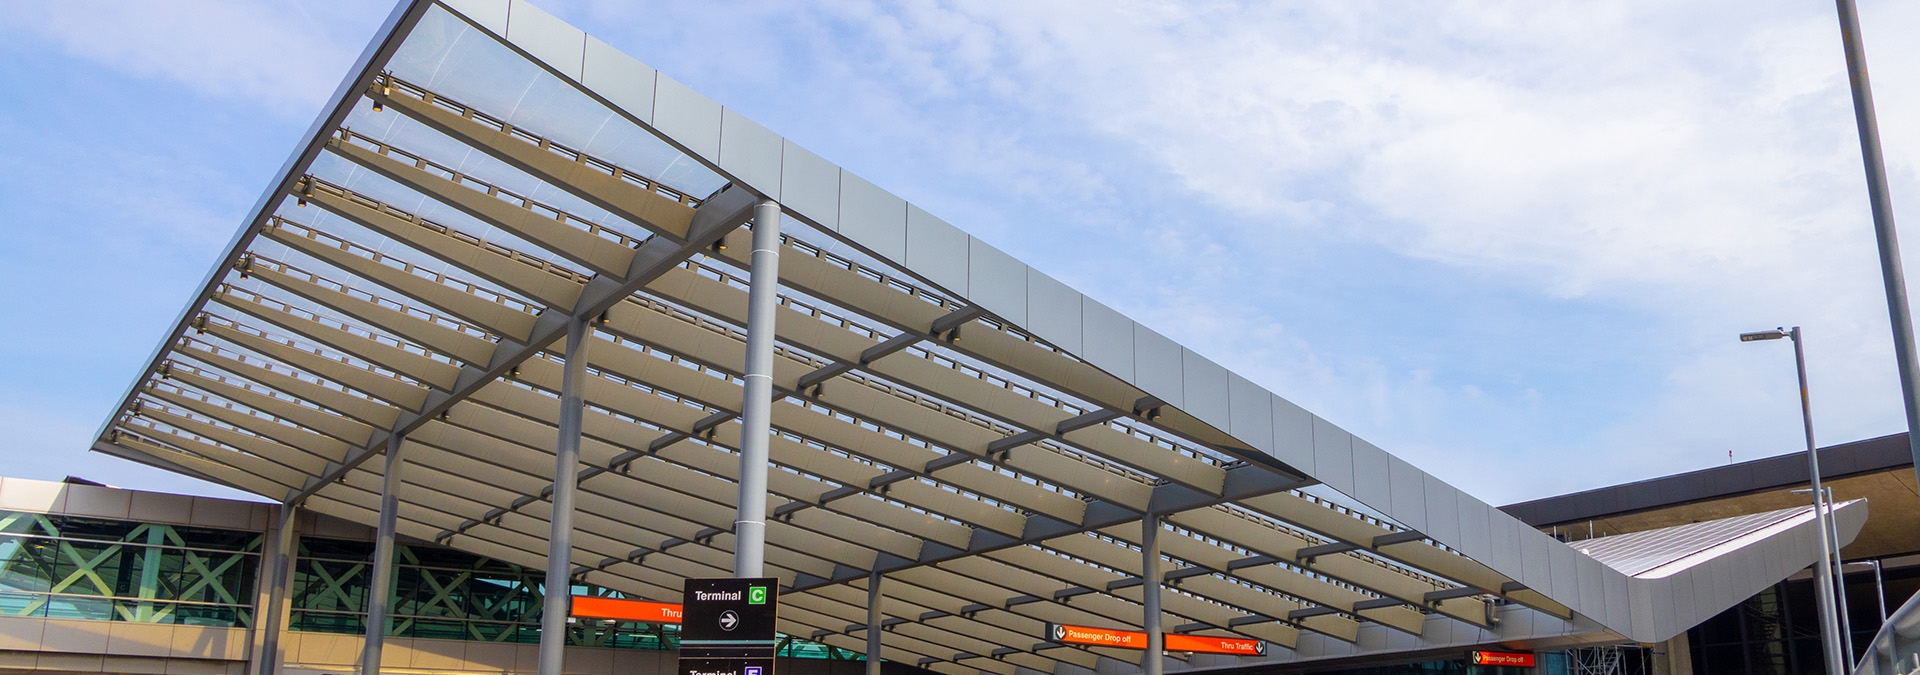 Solar panel canopy